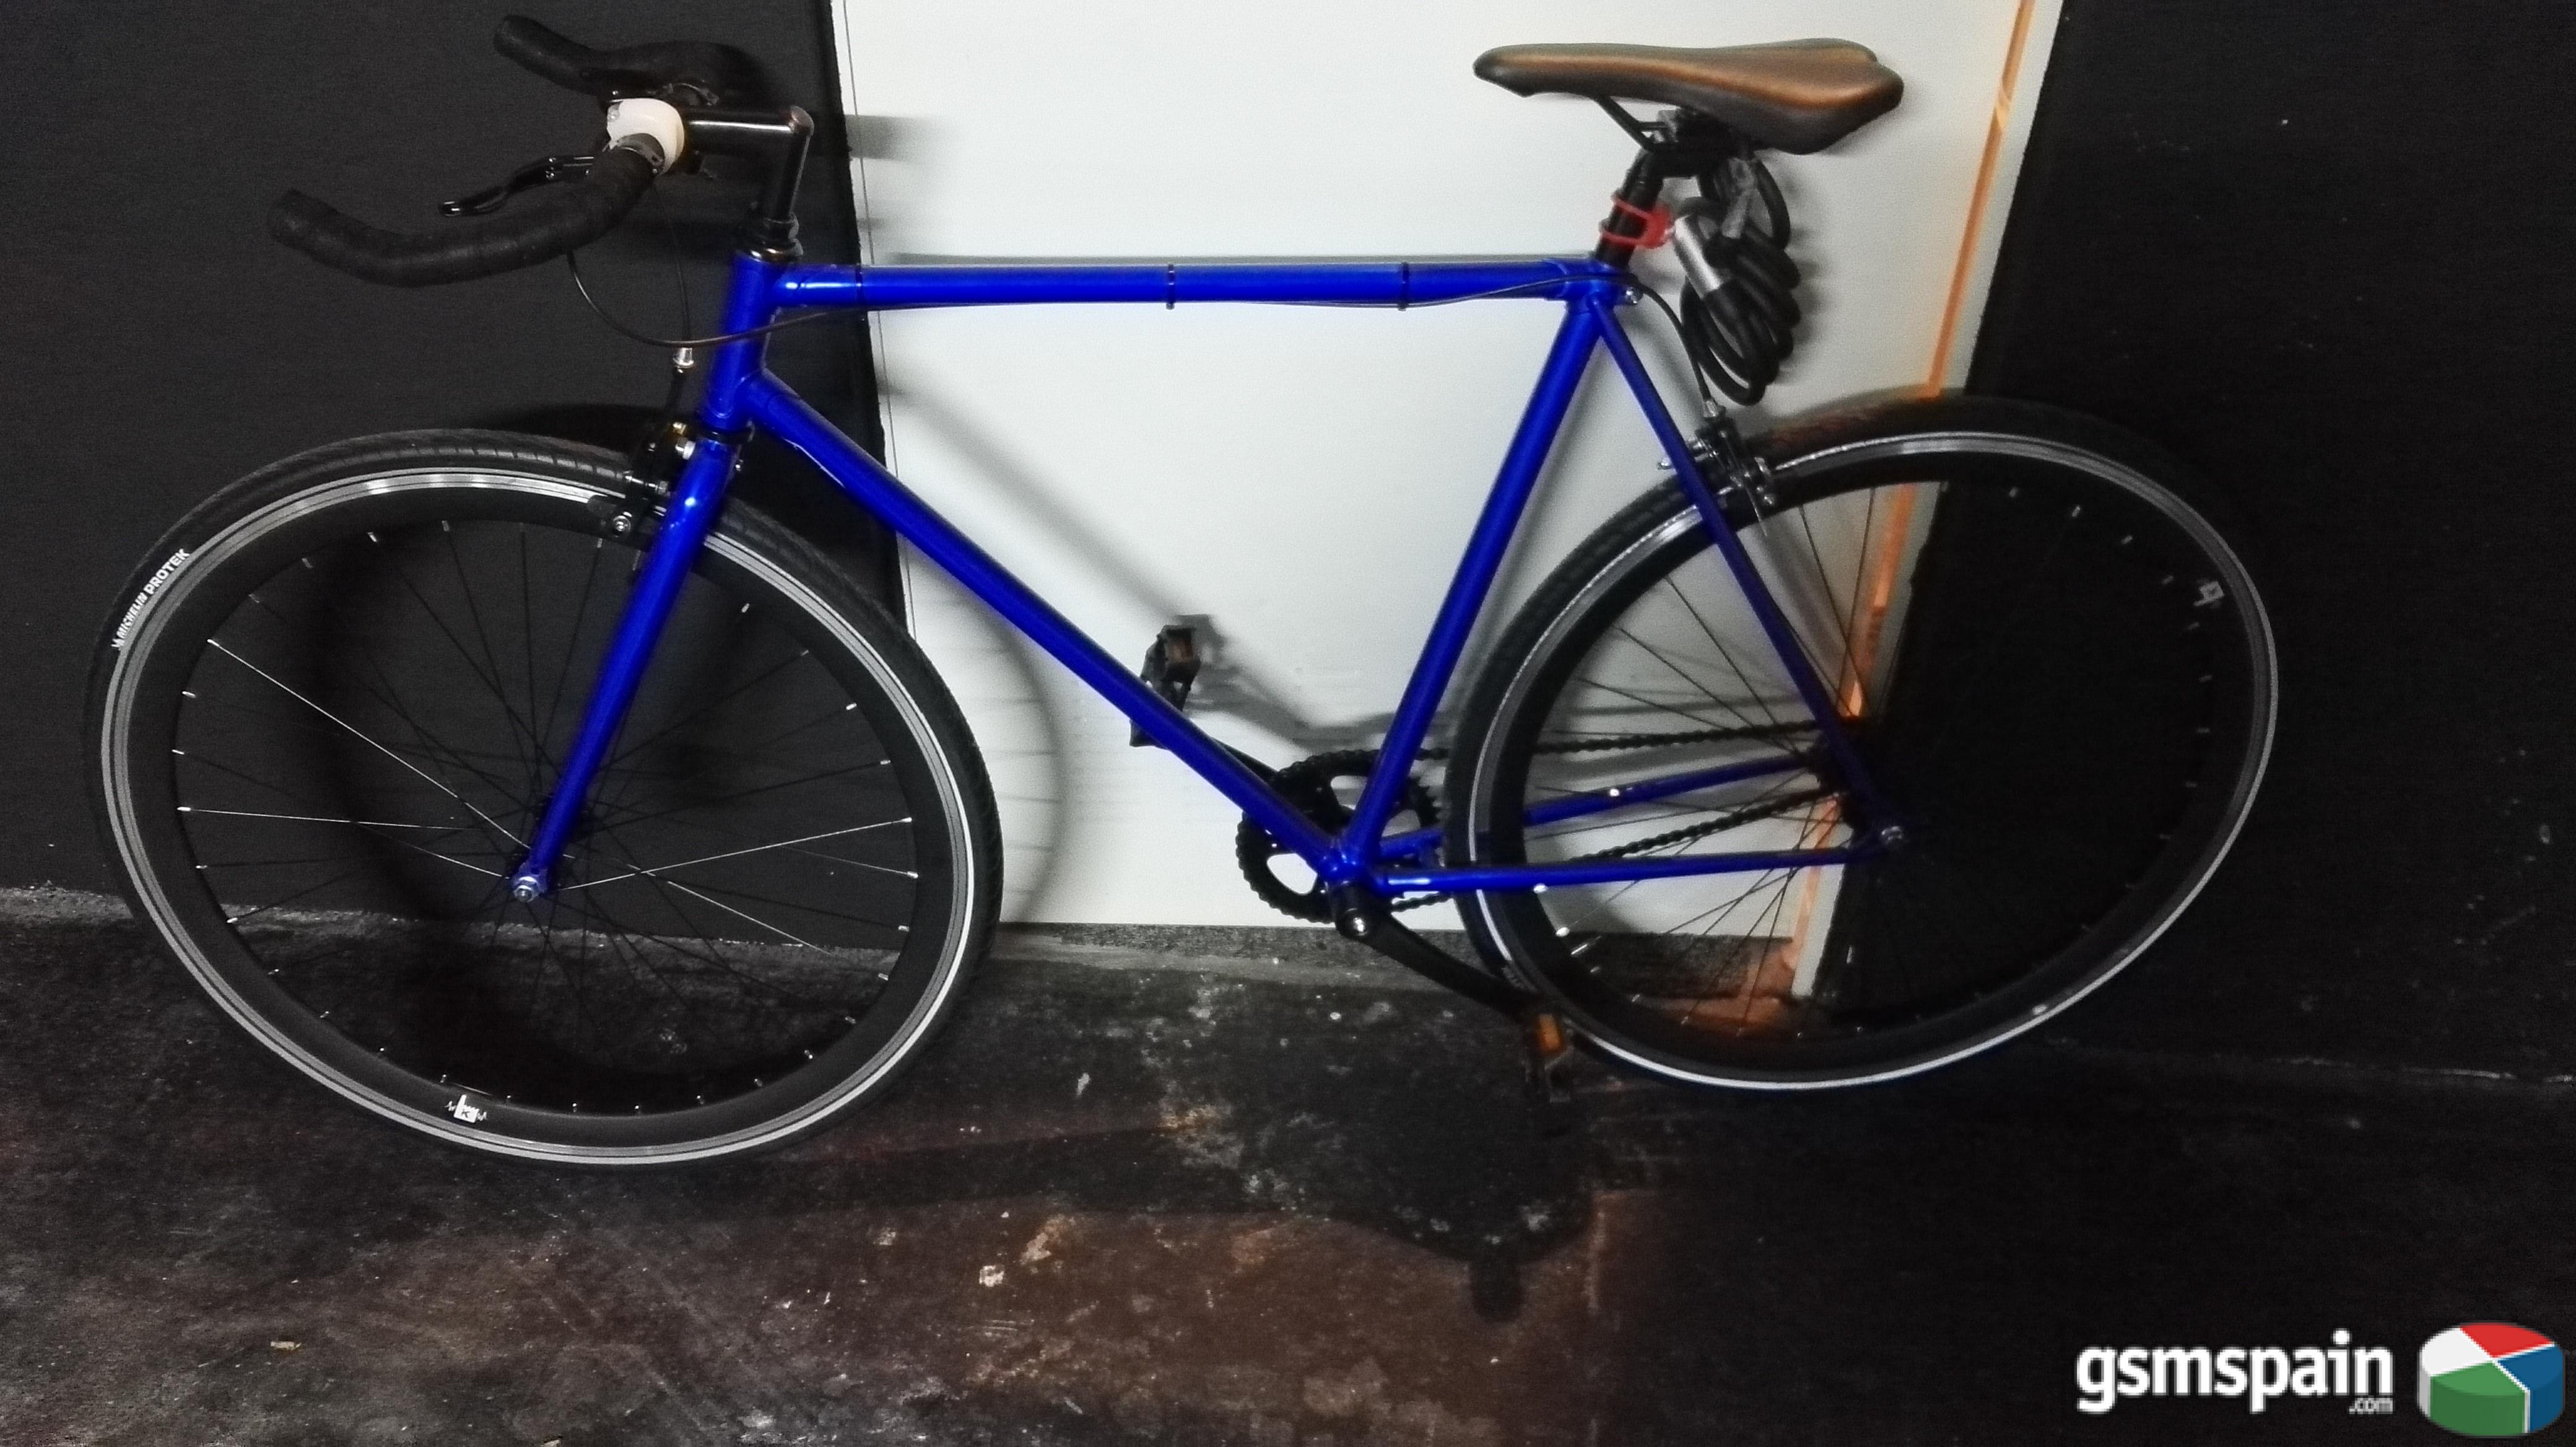 [VENDO] Bicicleta FIXIE nueva,sin usar,FACTURA,frenos,ruedas anti pinchazos,luces...240!!!